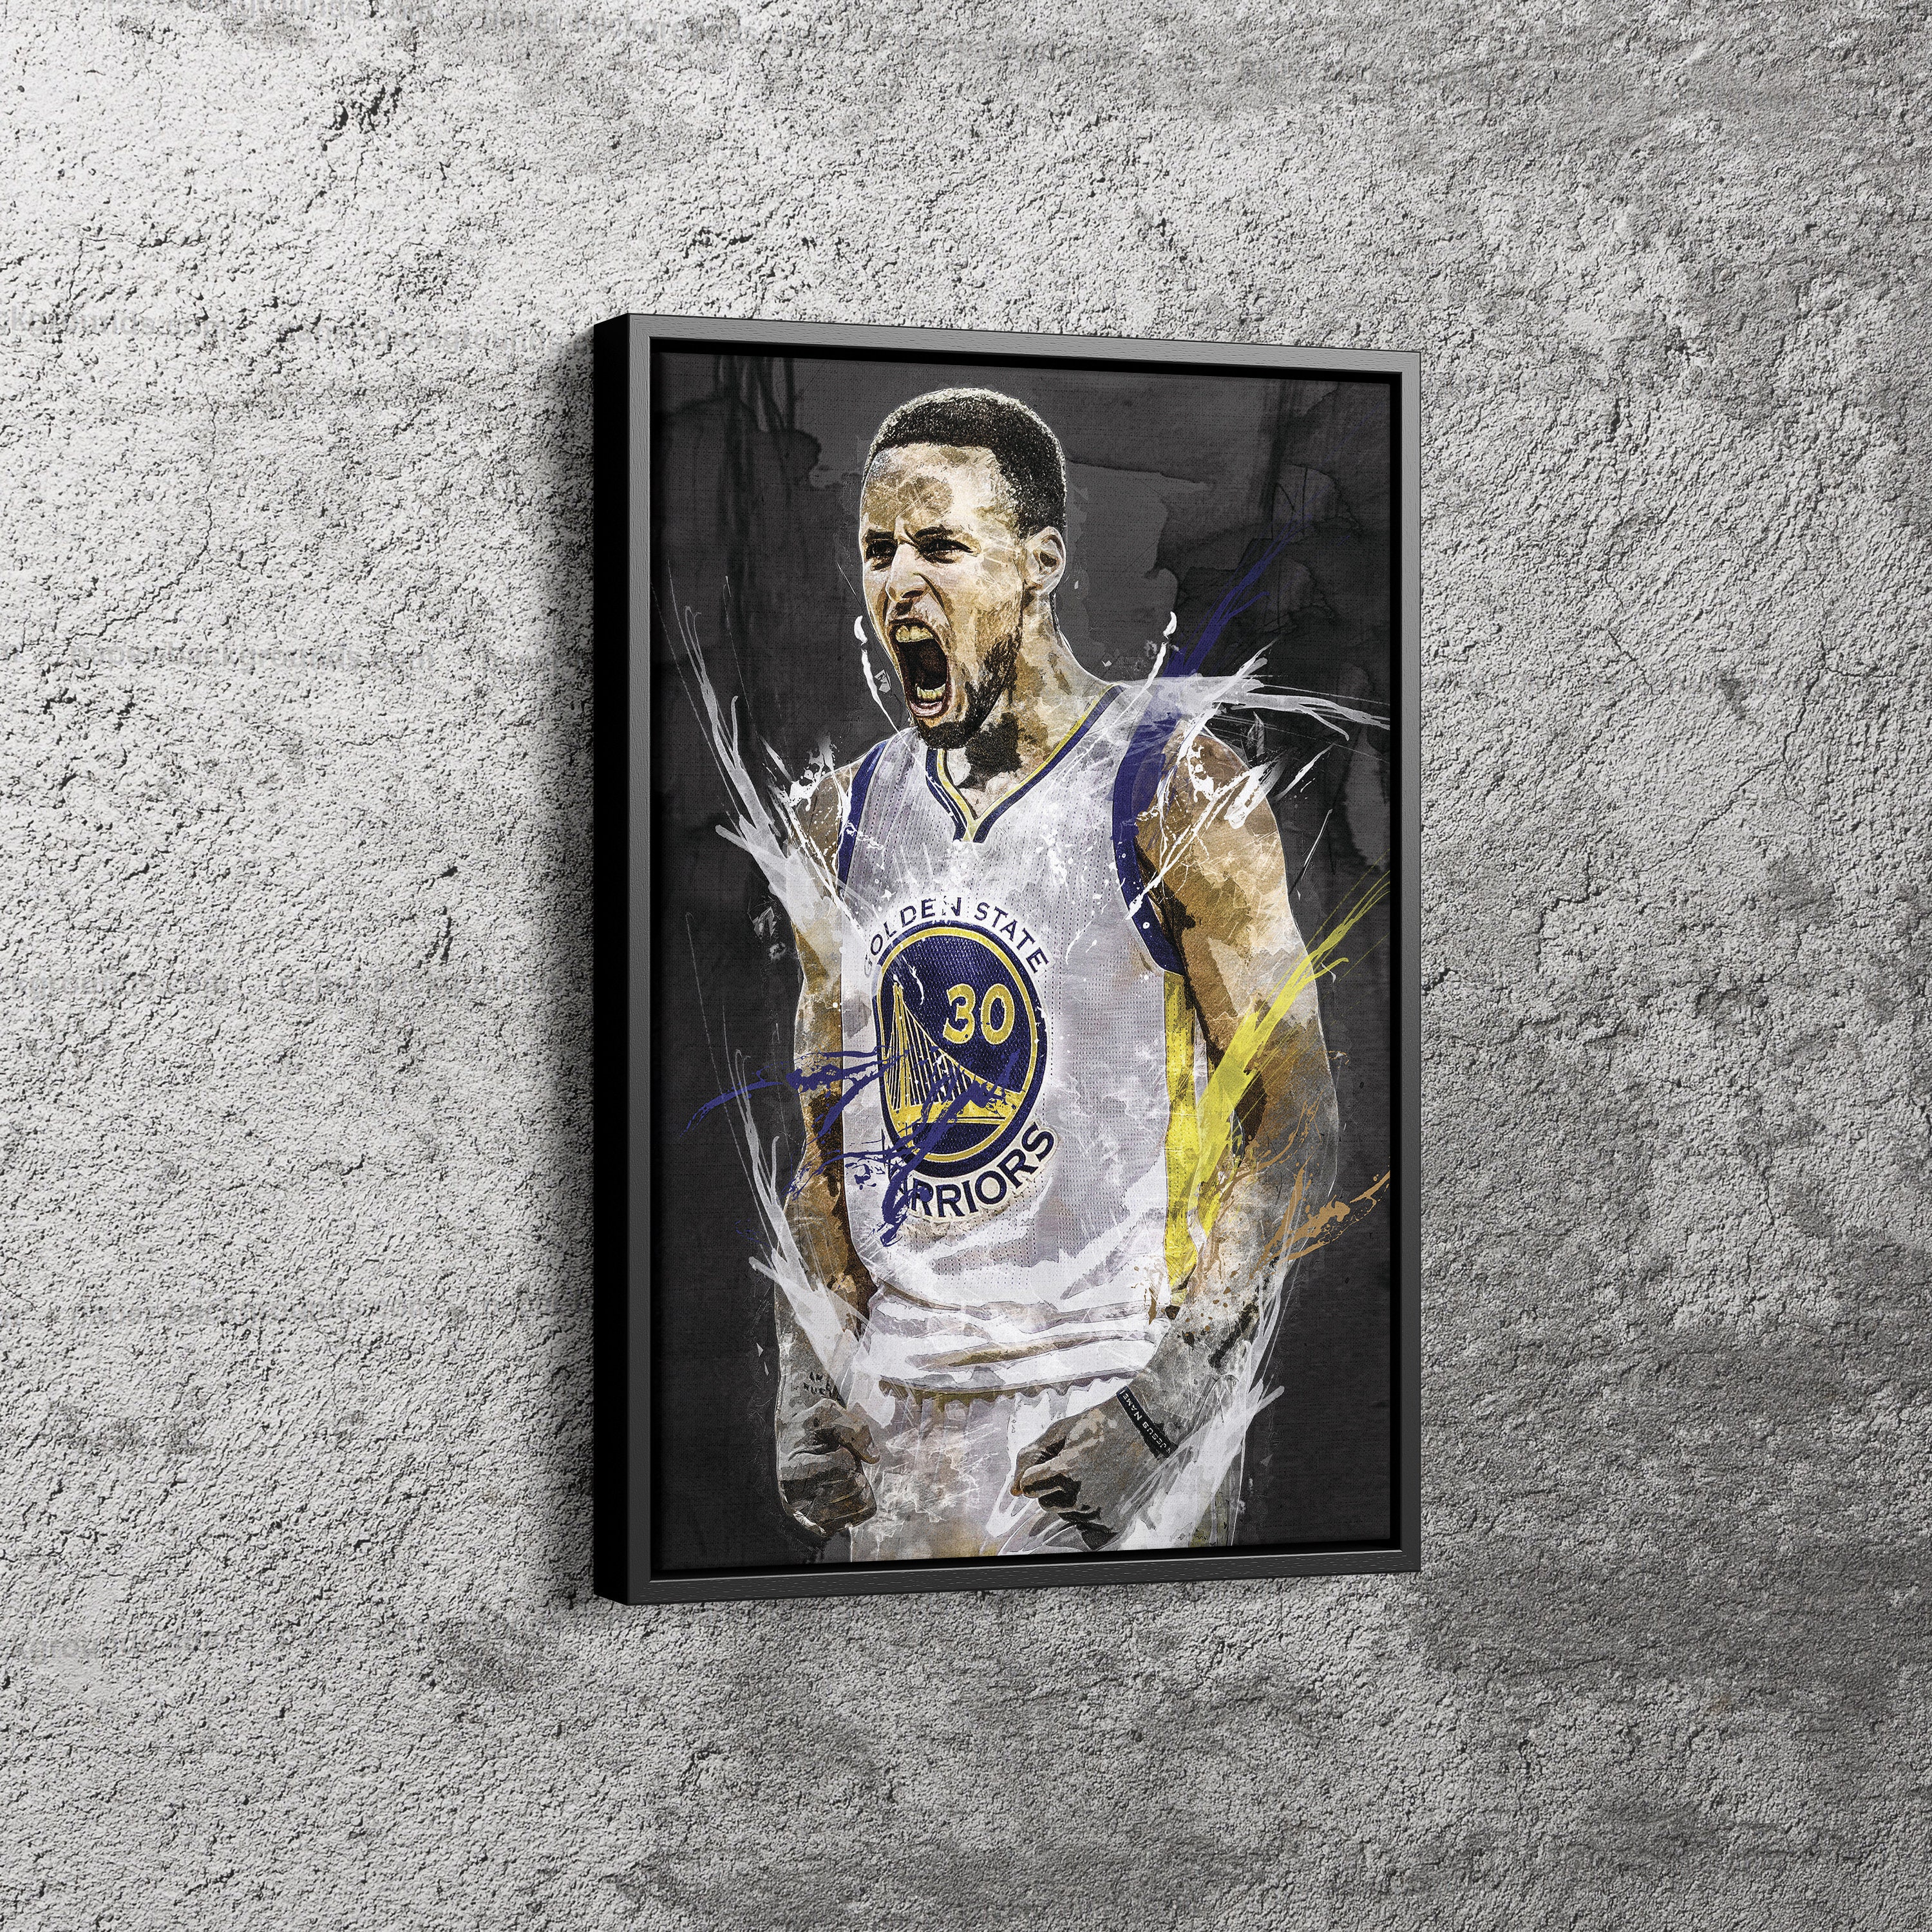 Golden State Warriors Full Back Steph Stephen Curry – GL Canvas Print Art